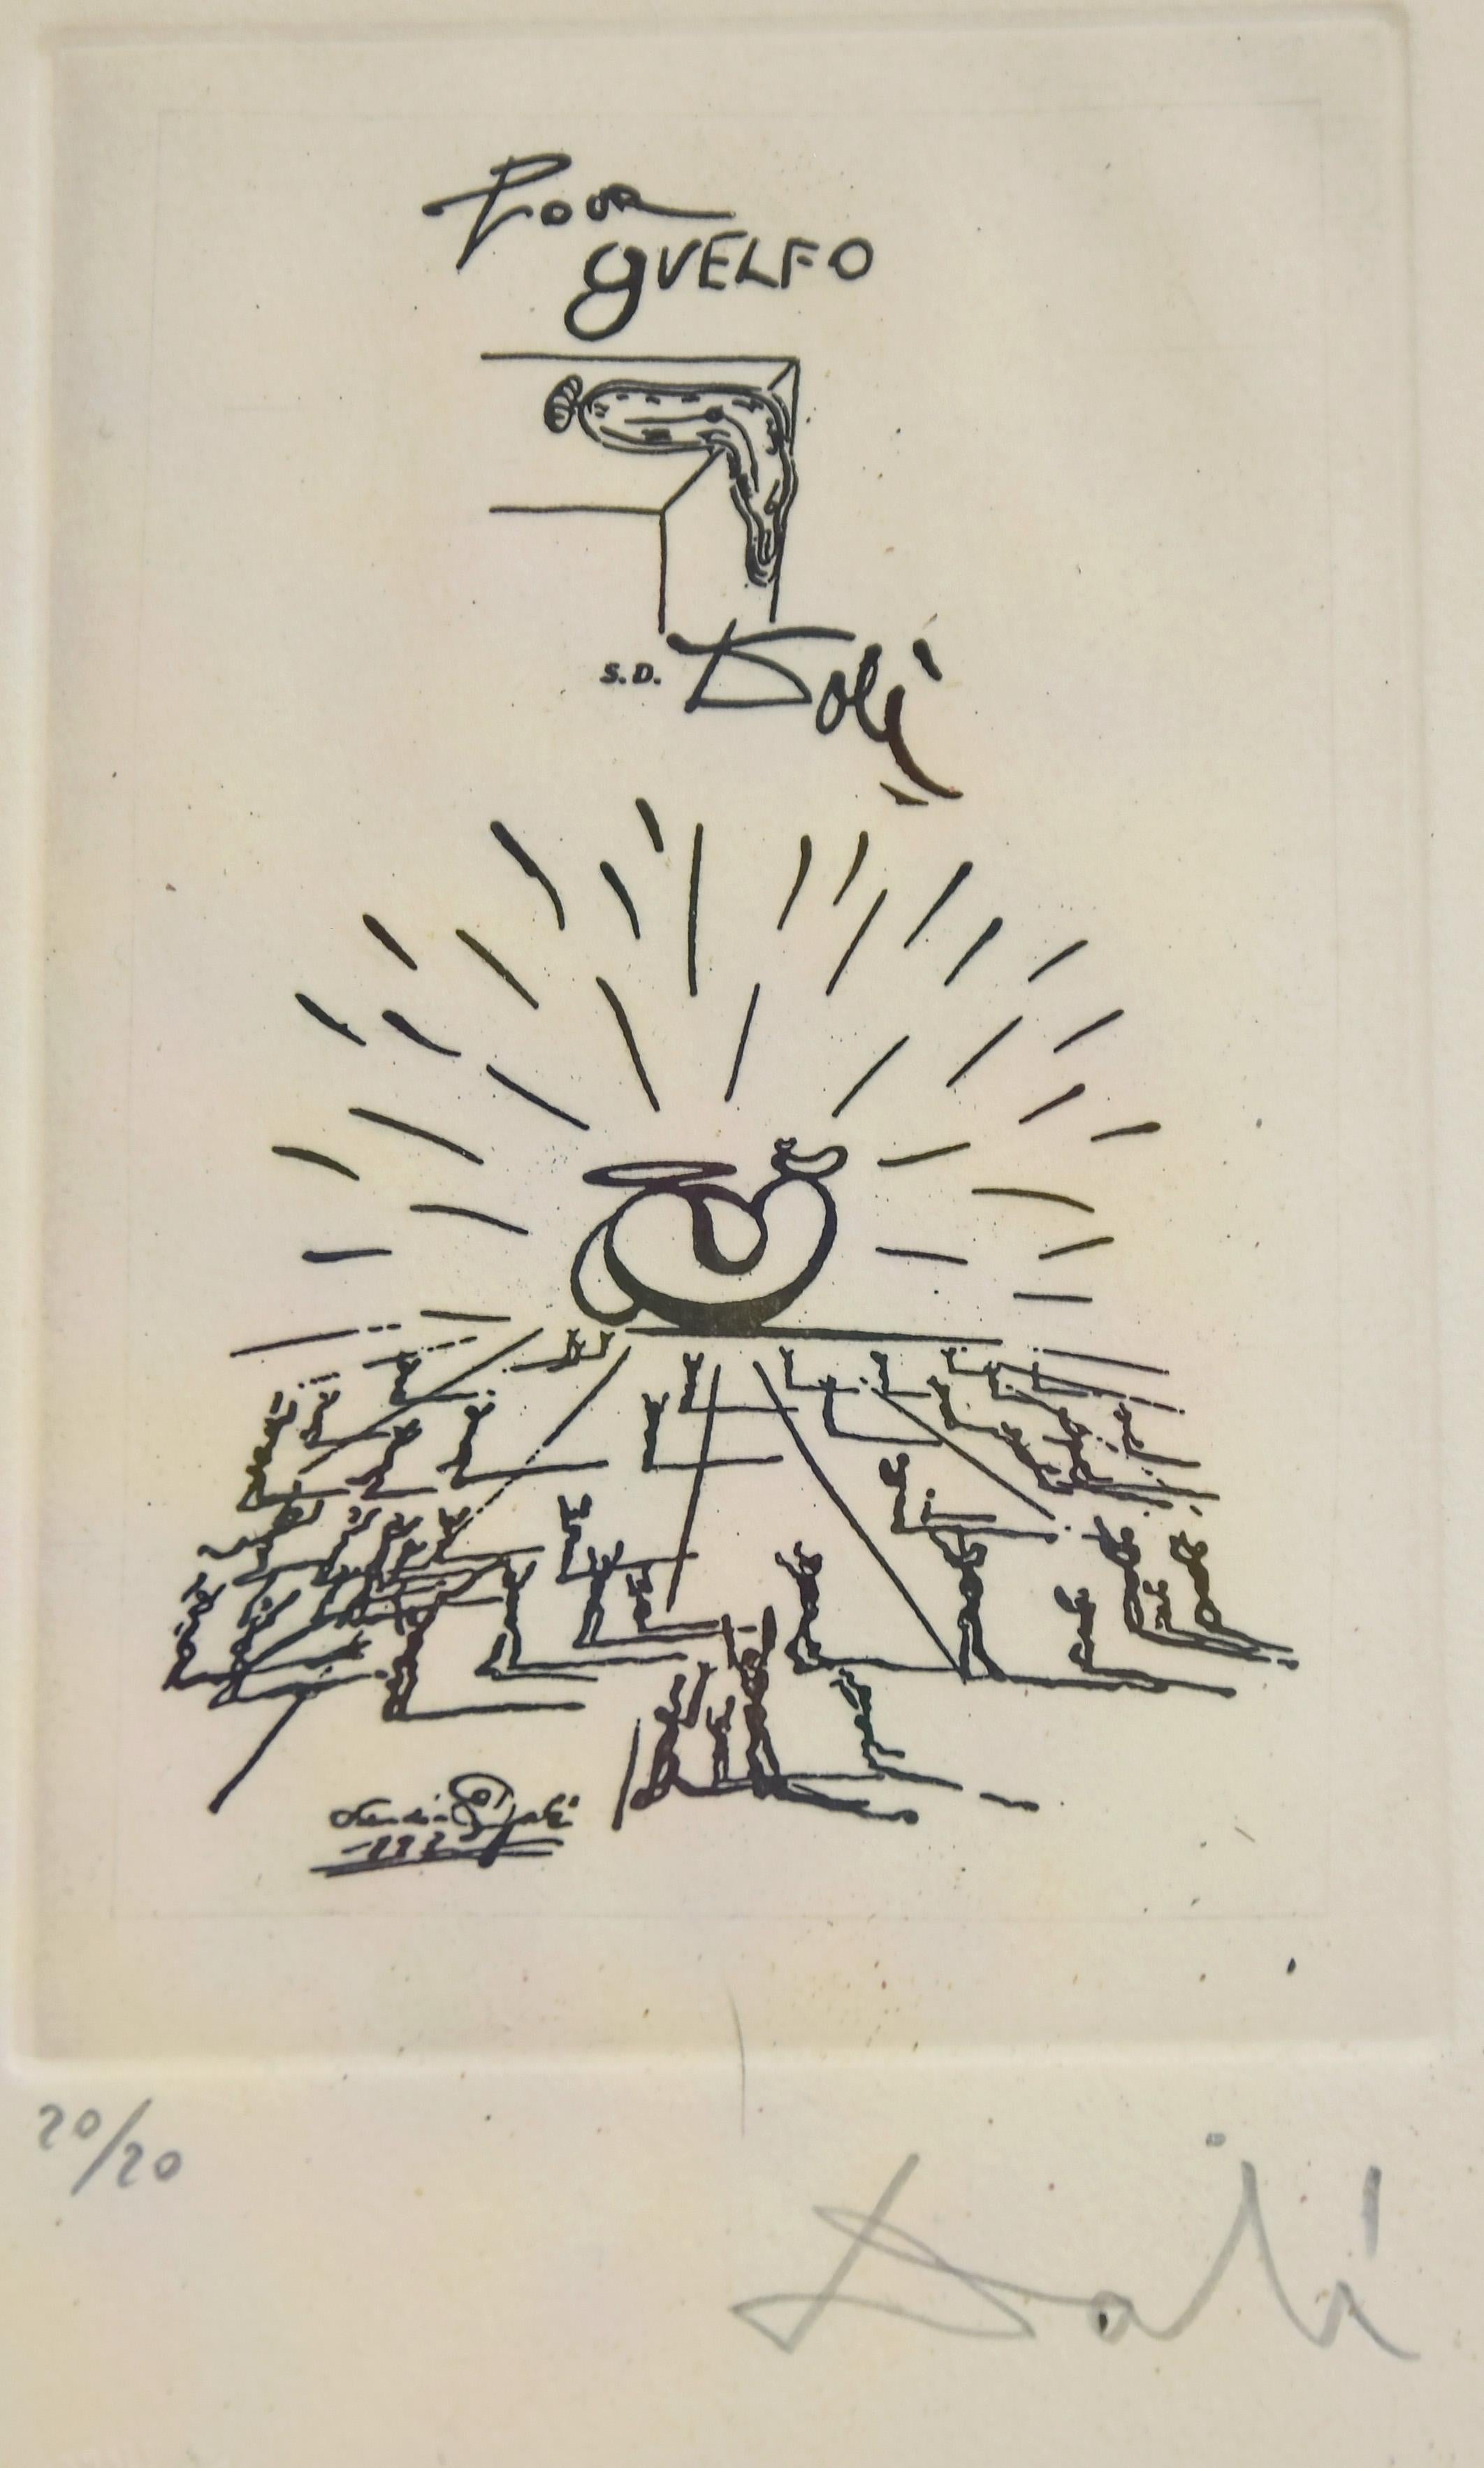 Salvador Dalí Print - Pour Guelfo - Original Etching by S. Dali - 1970s